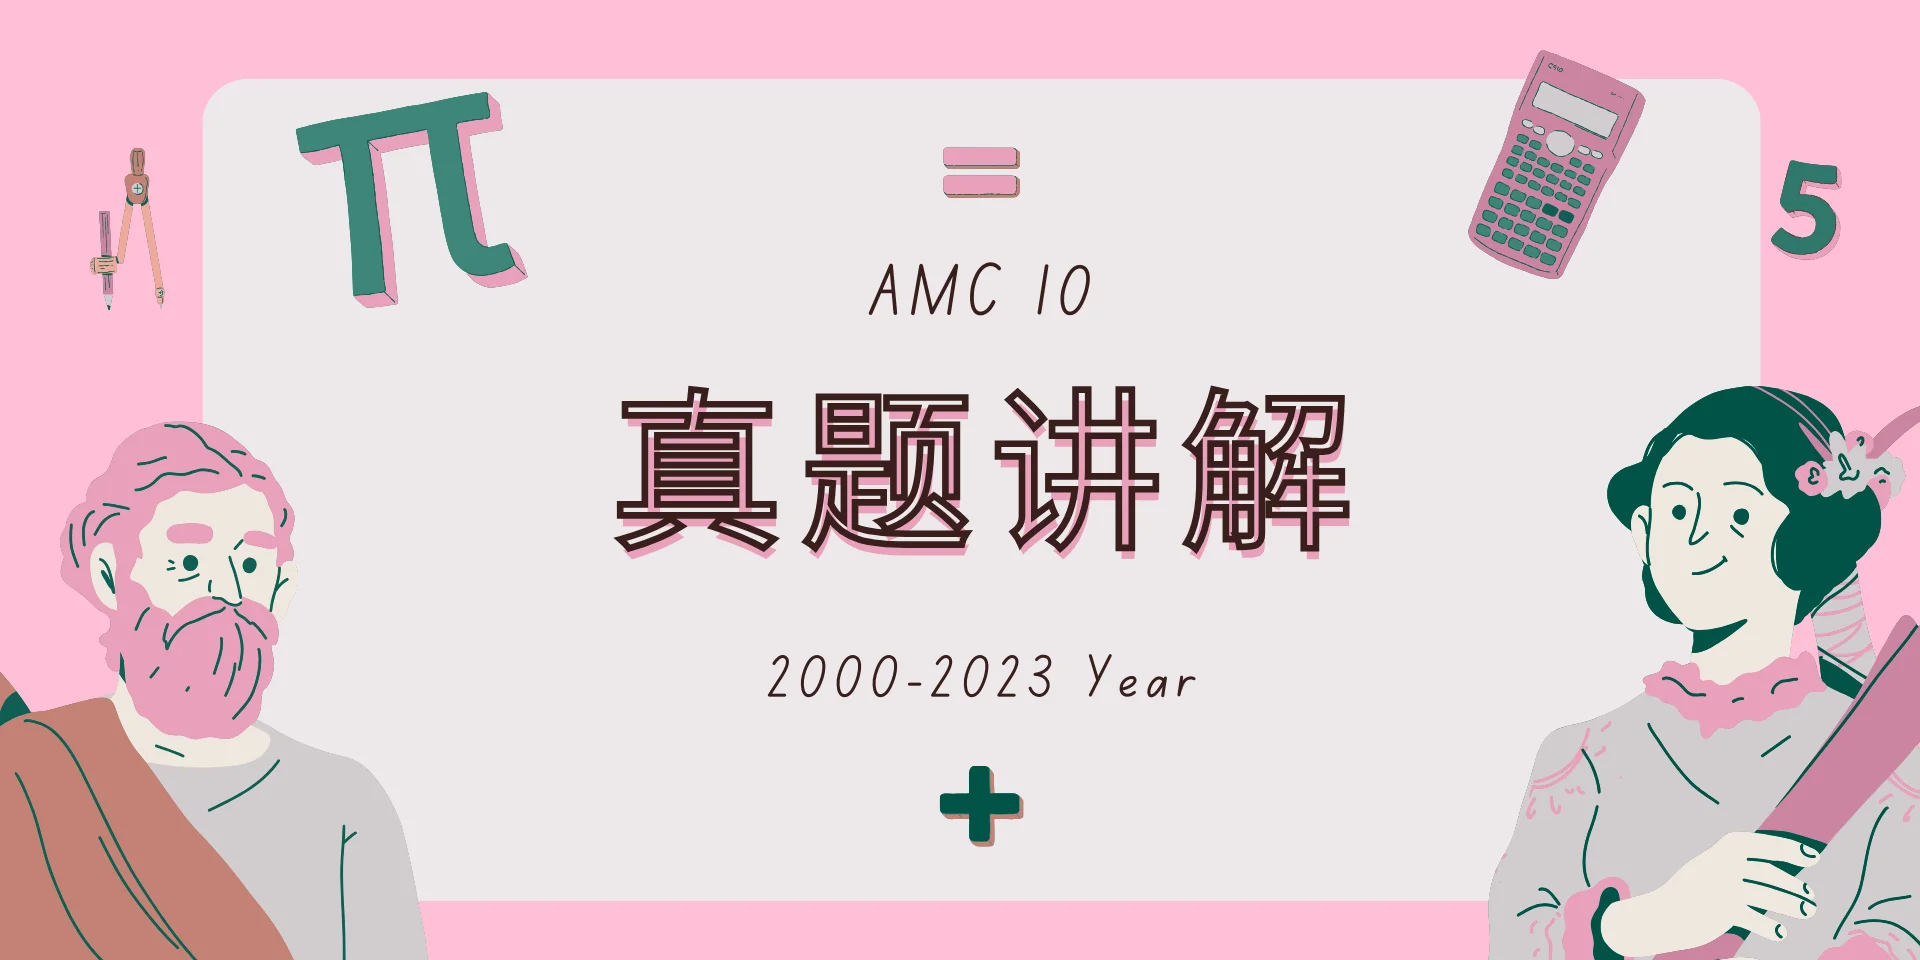 AMC10 真题解析 AMC10 2000-2023年真题解析 explanation